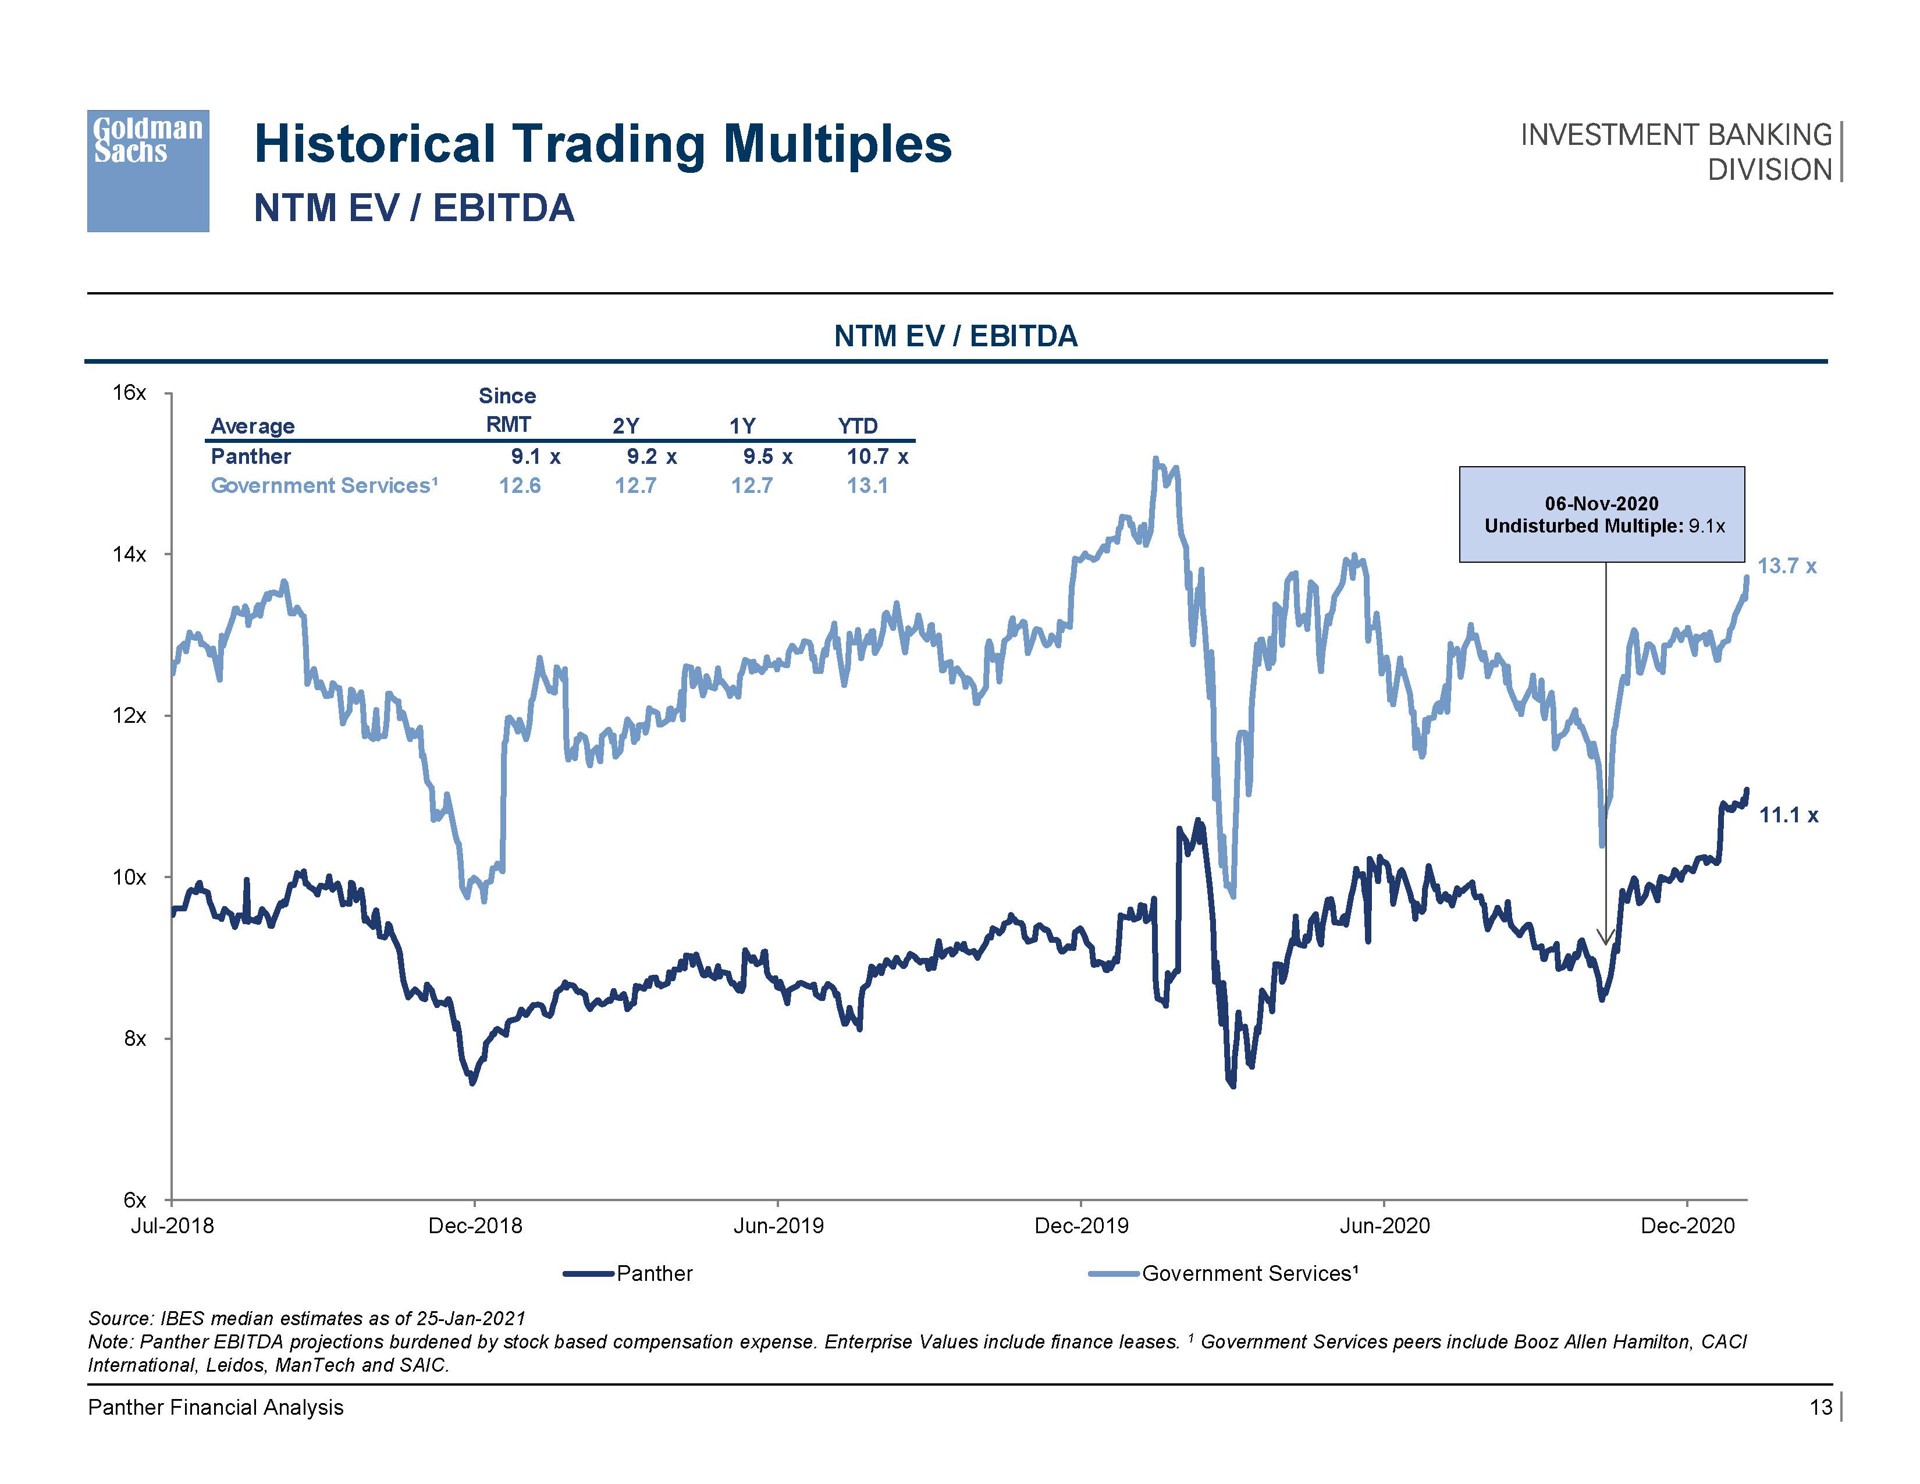 historical trading multiples | Goldman Sachs